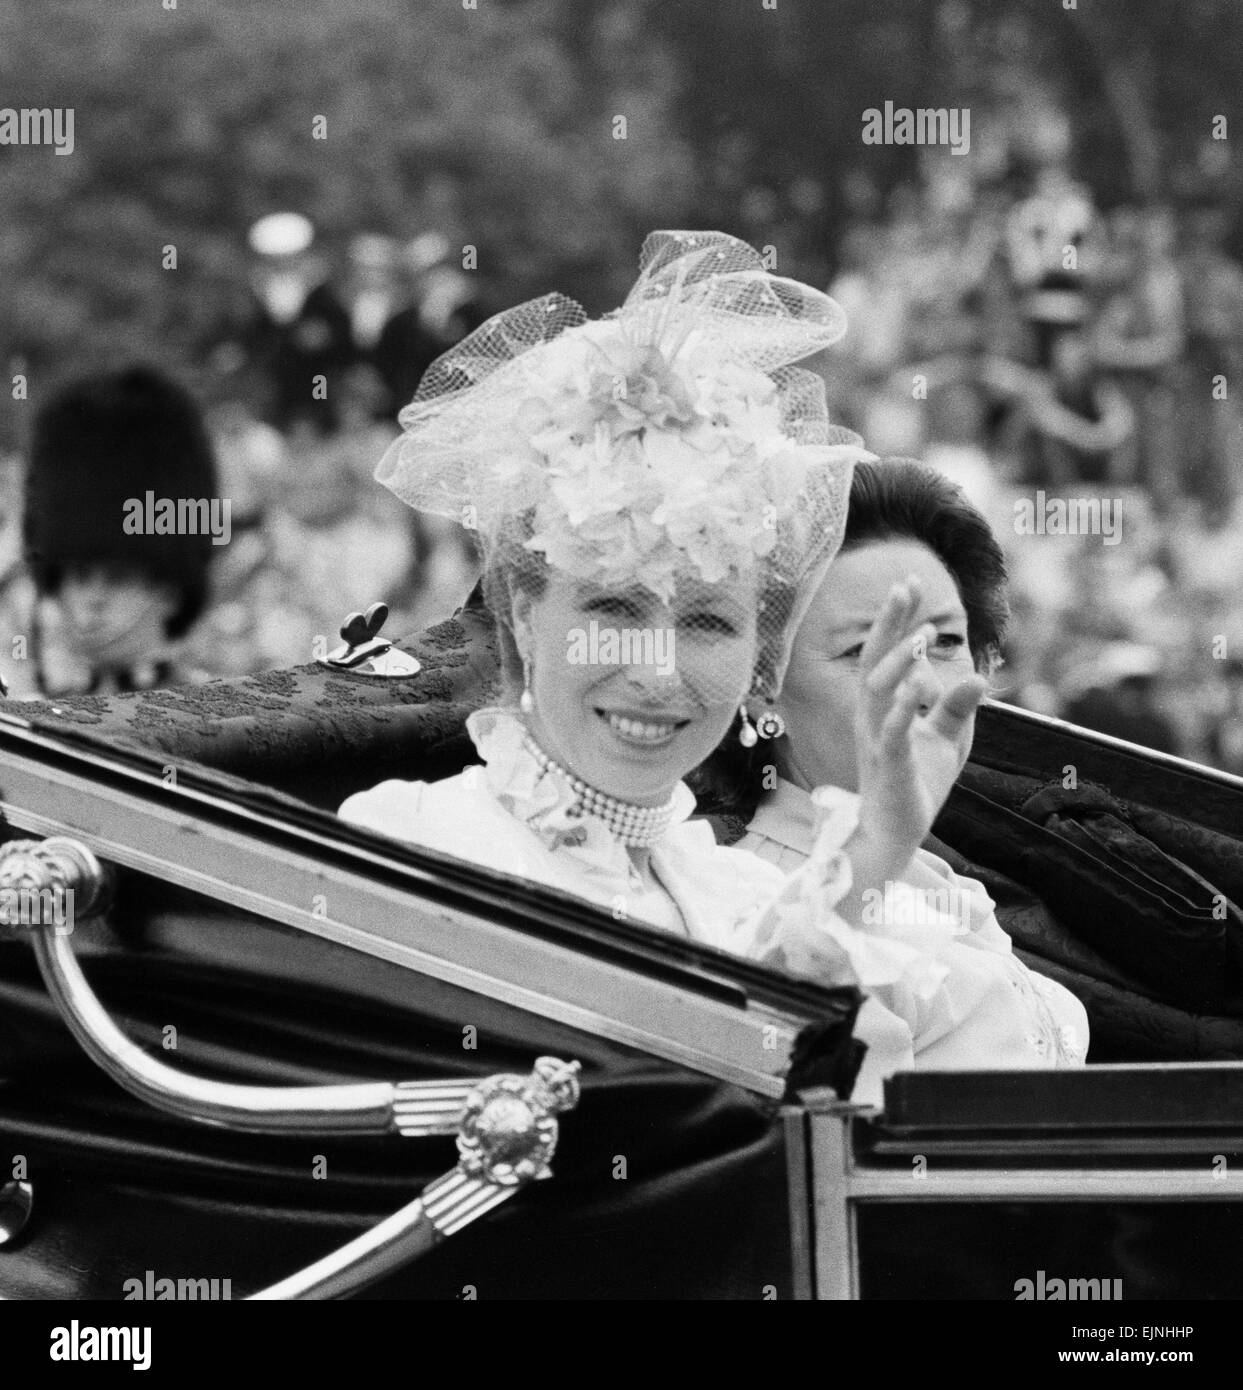 prince-charles-and-diana-spencer-wedding-29th-july-1981-princess-anne-EJNHHP.jpg